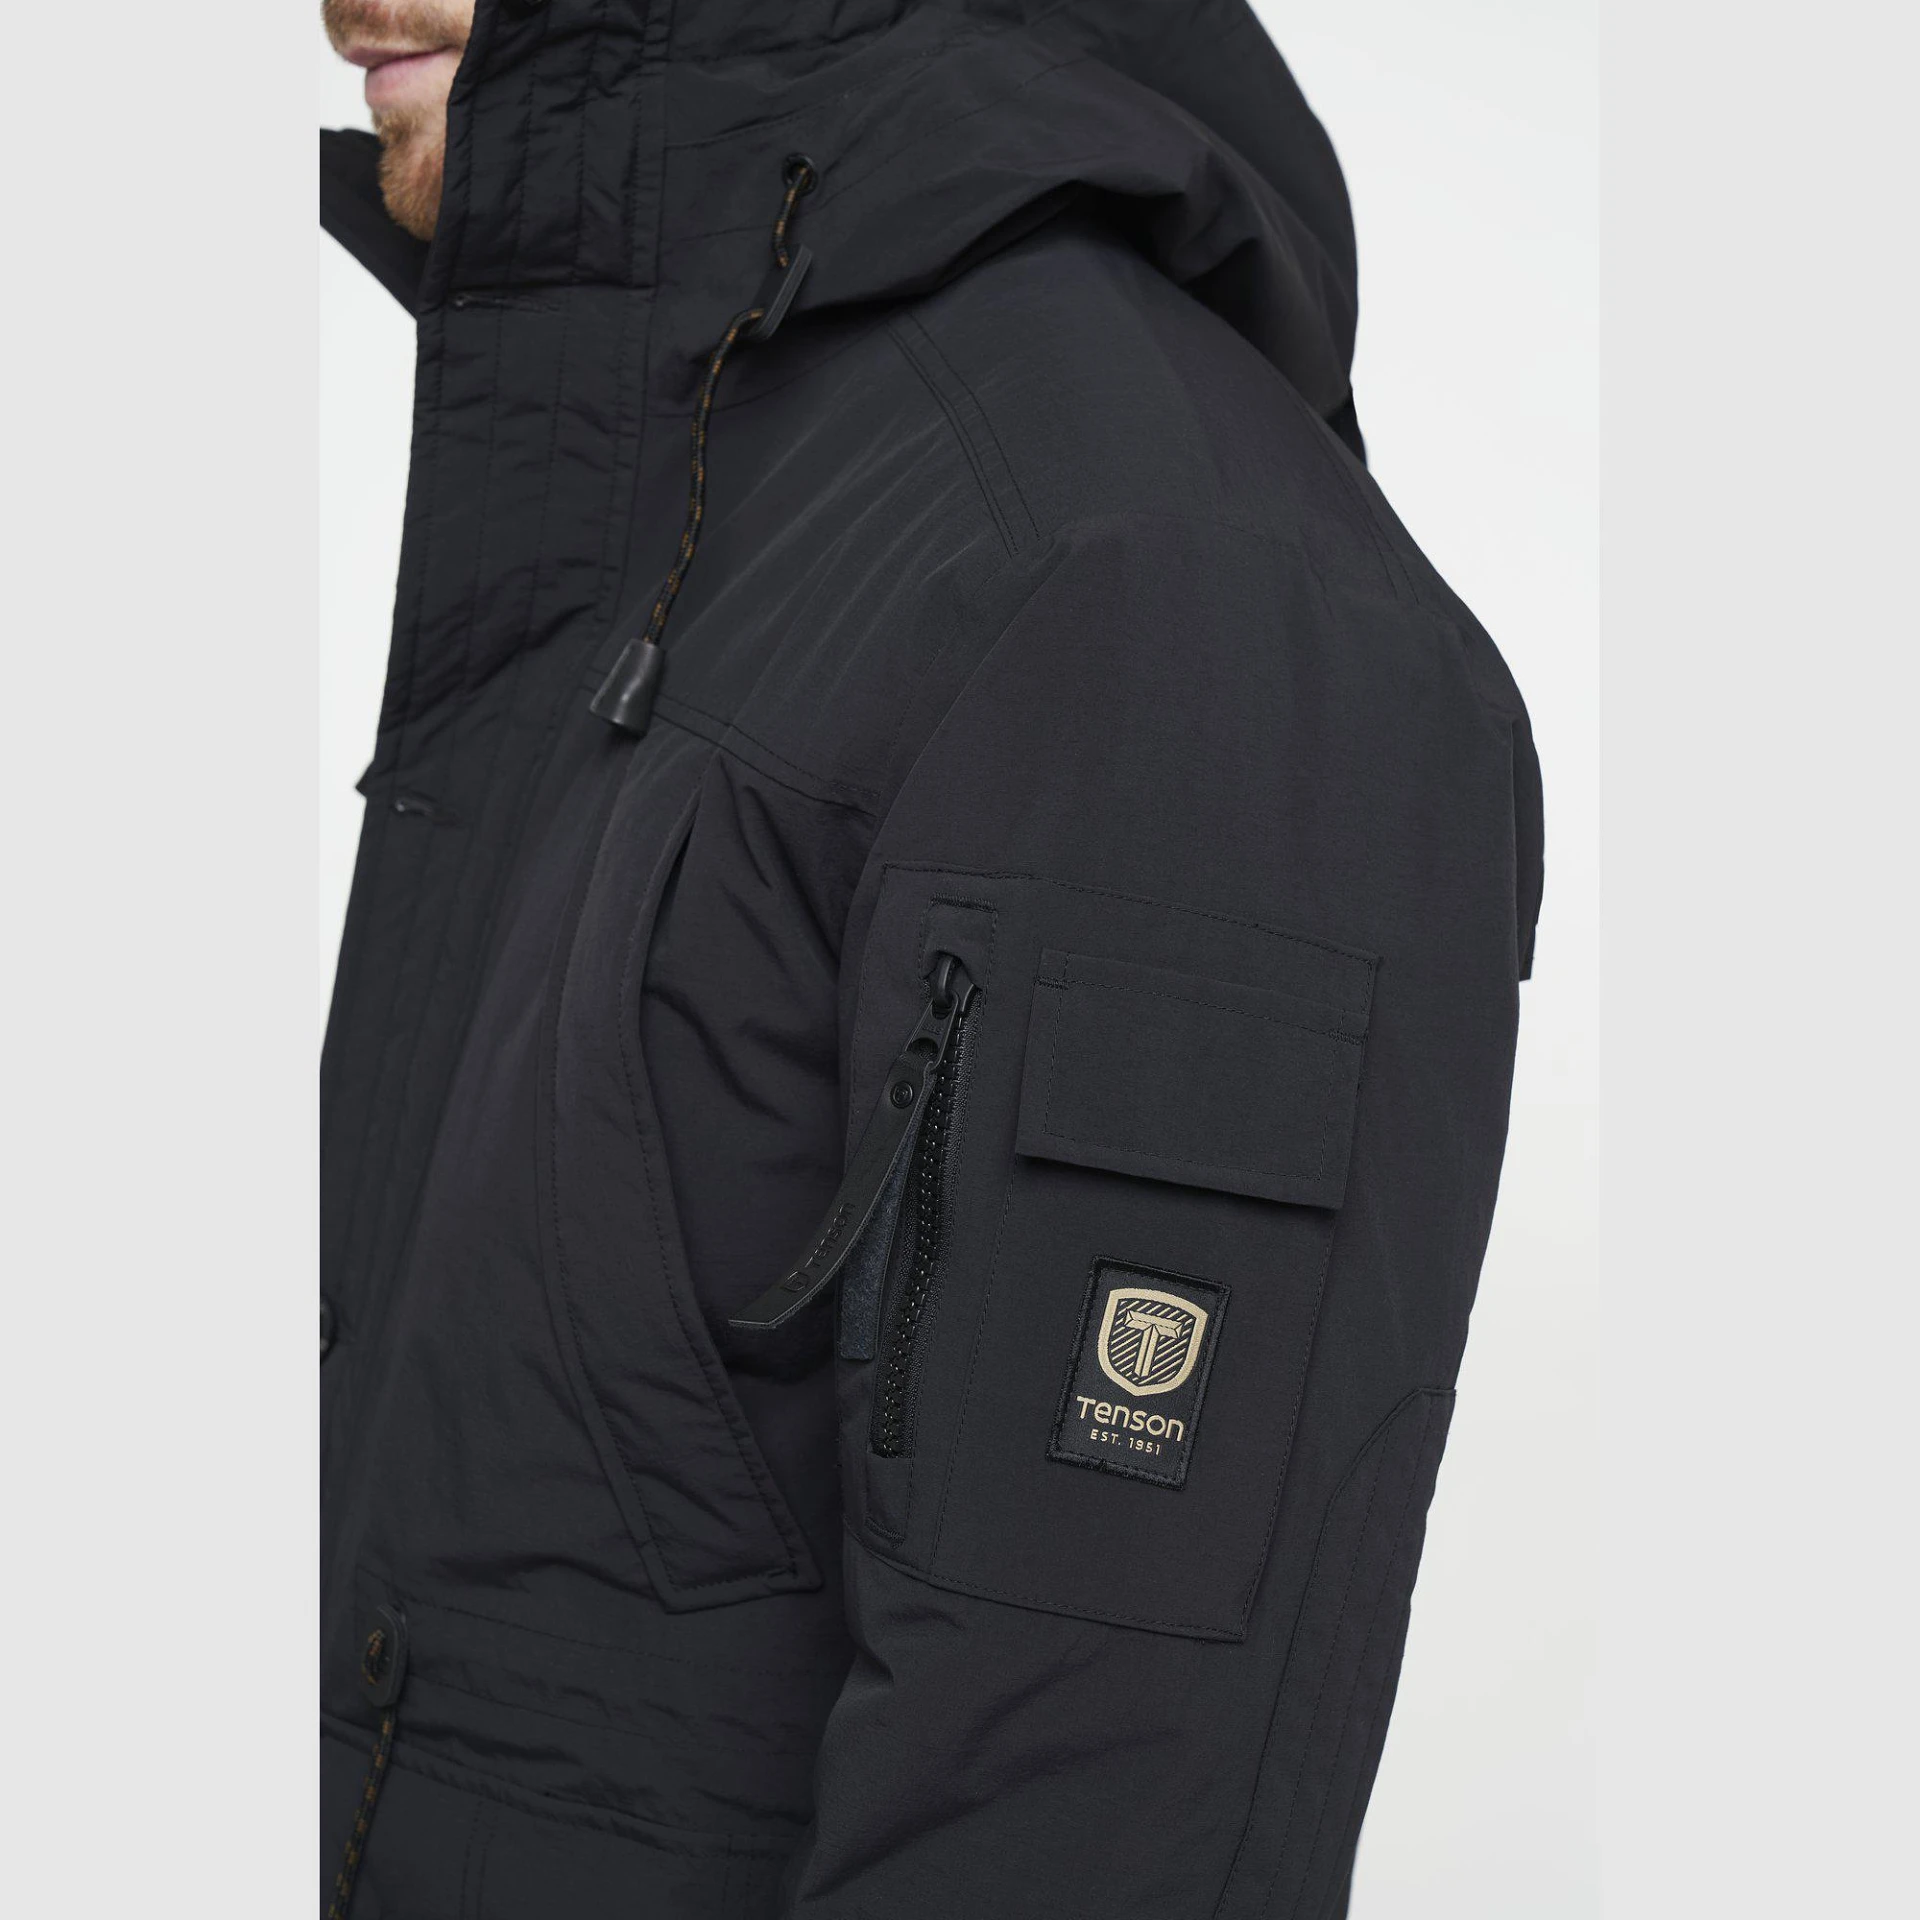 Himalaya Ltd Jacket M